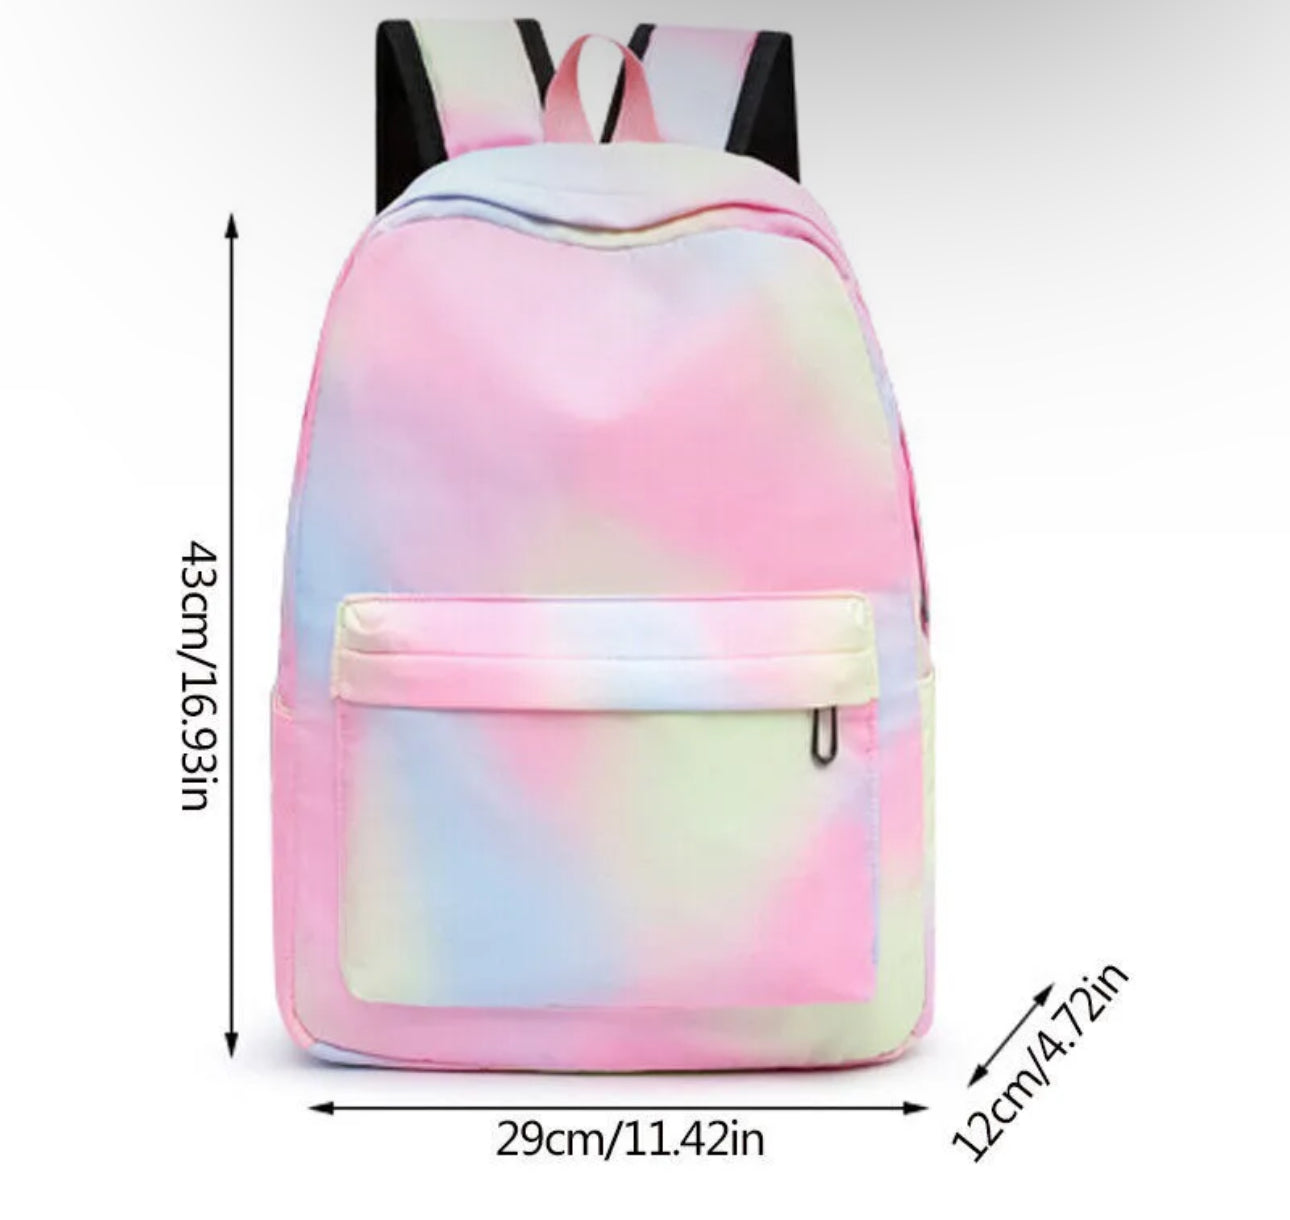 3pc School Set Backpack/Pencil Case/Lunch Bag